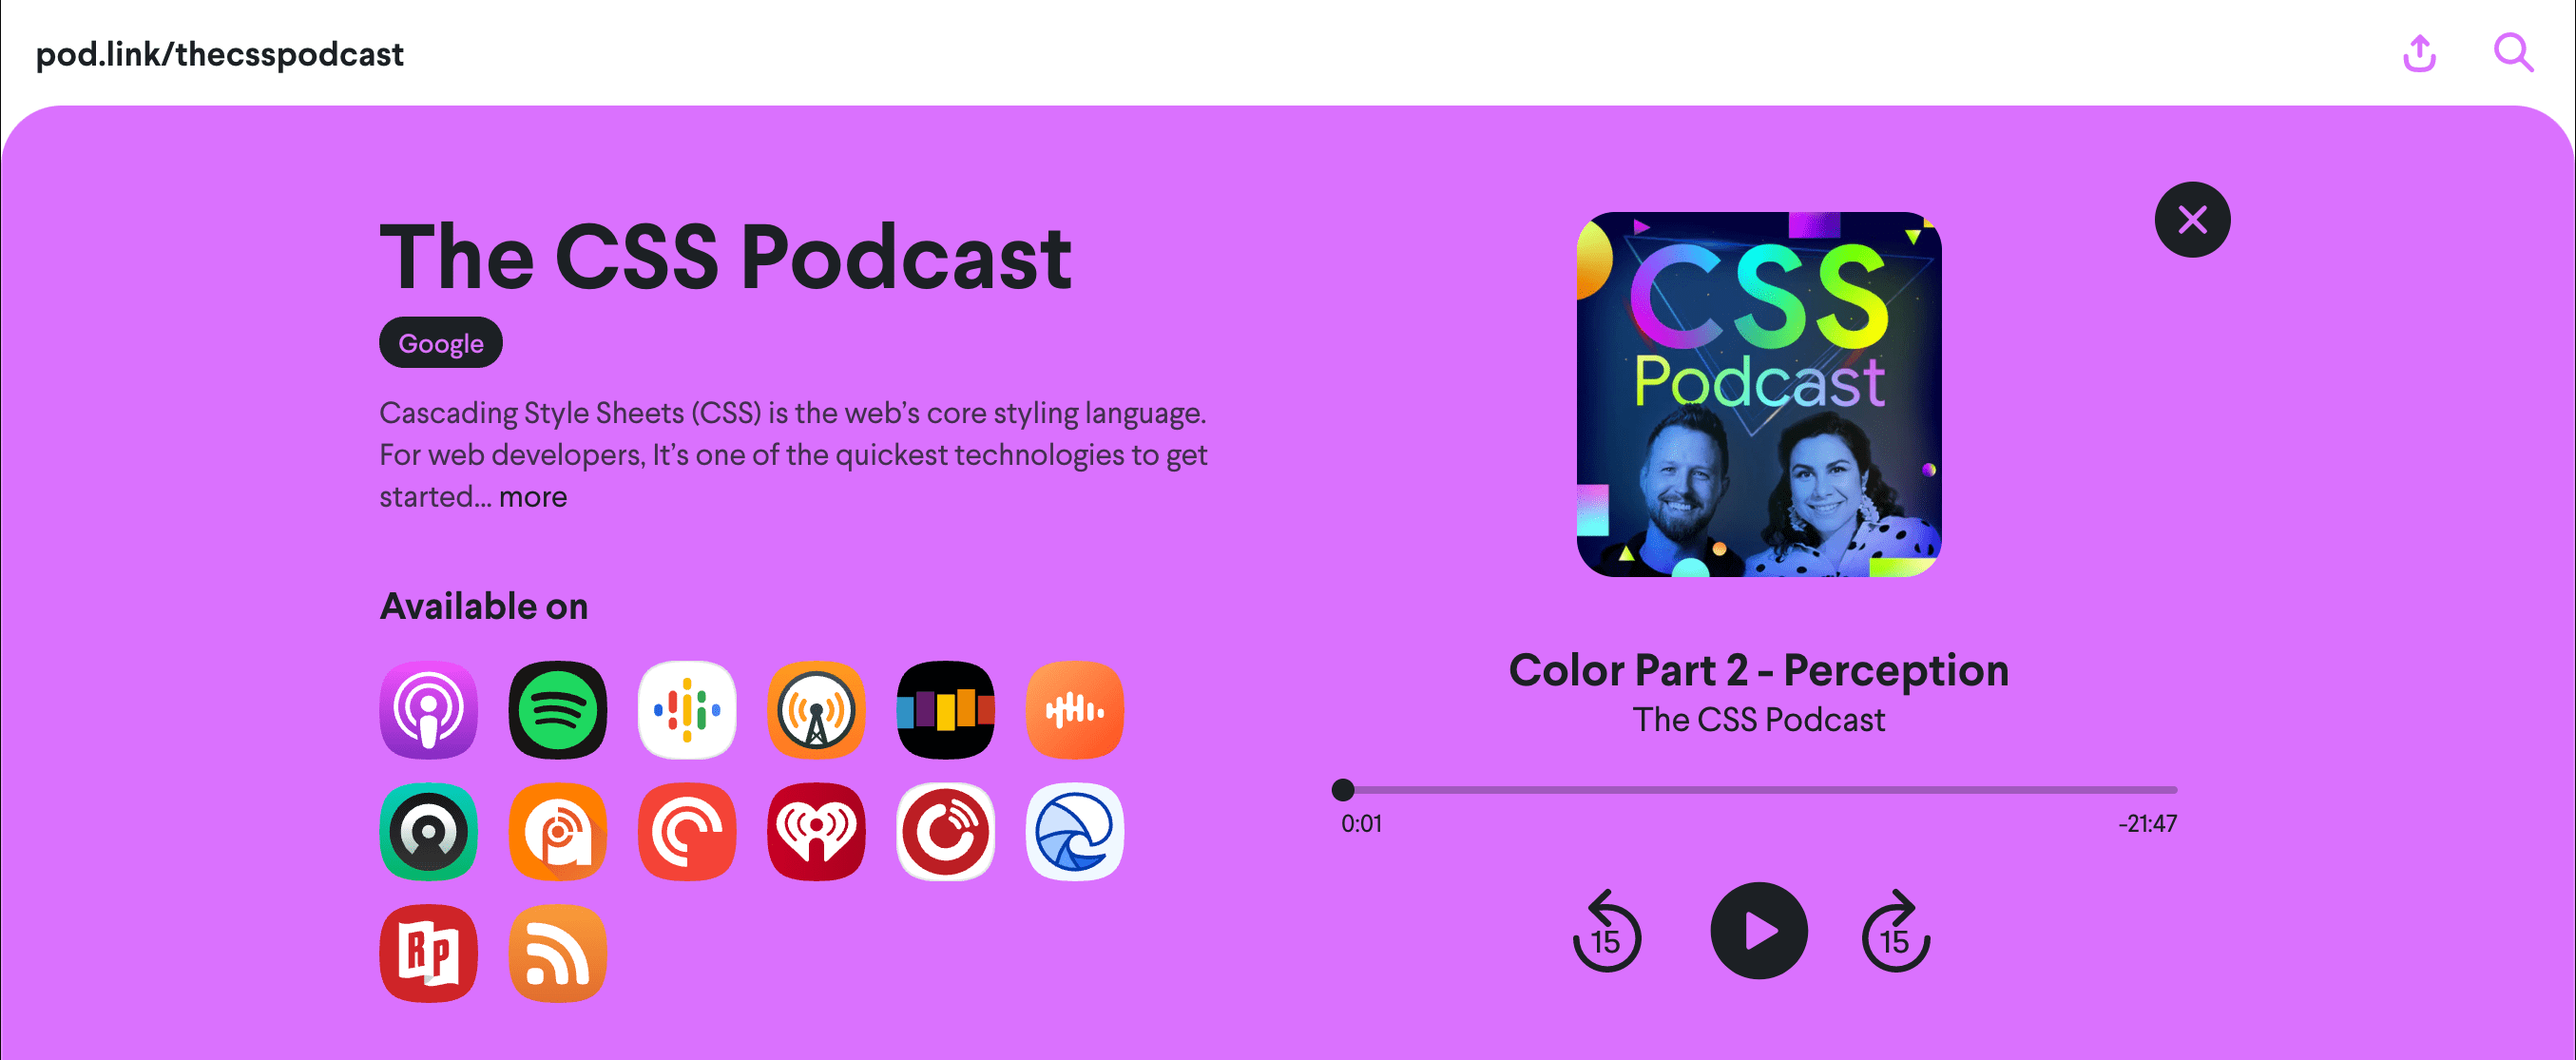 pod.link/csspodcast 网页的屏幕截图，其中调出颜色 2：感知剧集